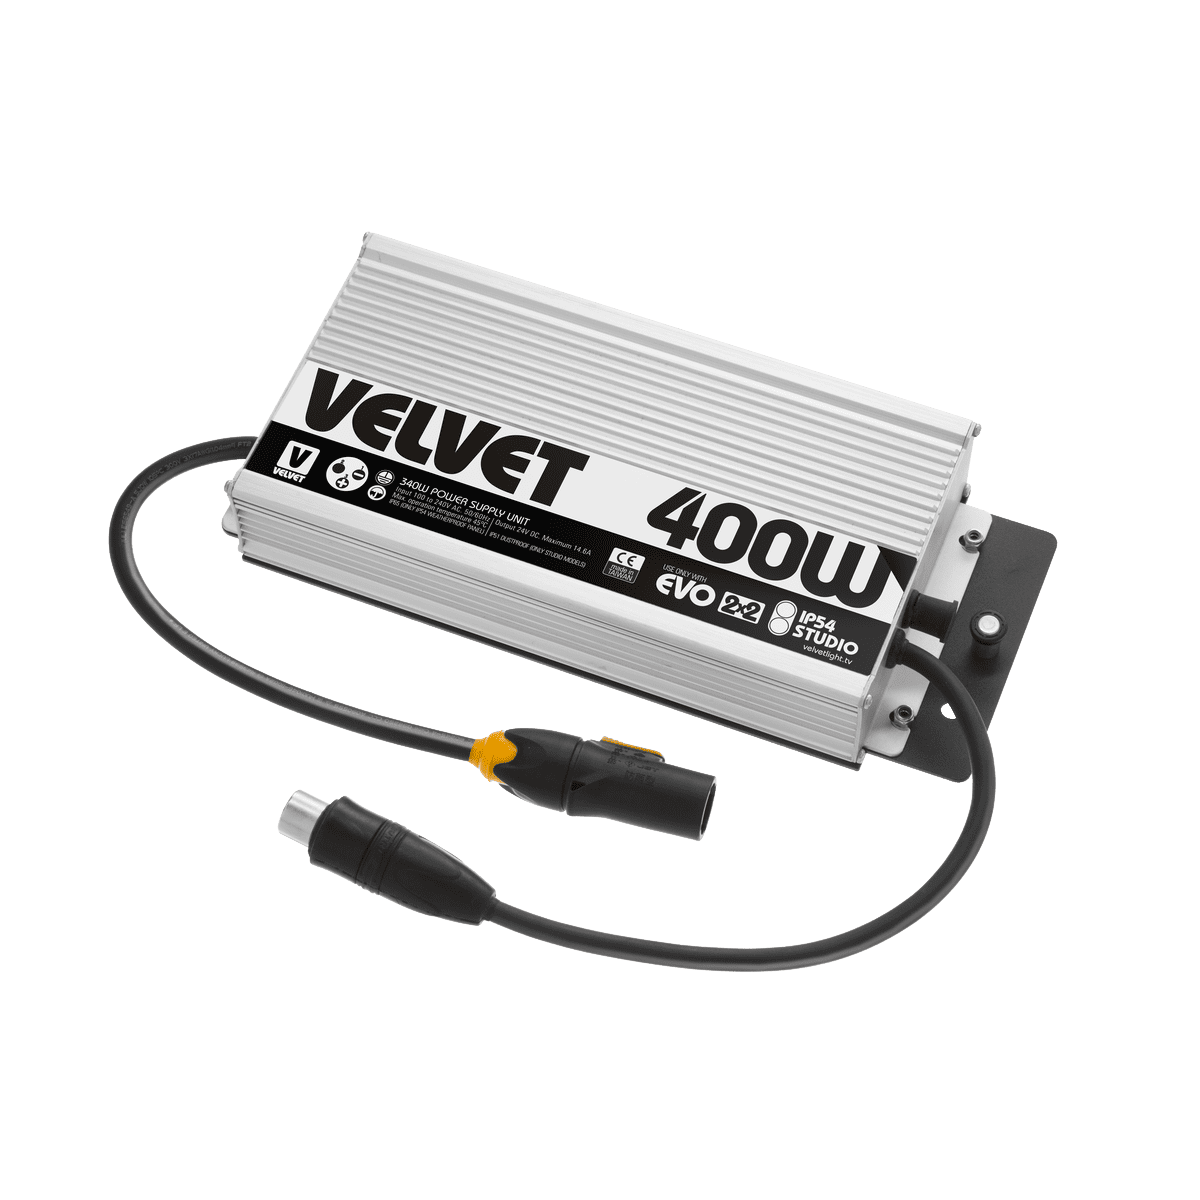 Velvet Light 400W Weatherproof AC power supply IP54